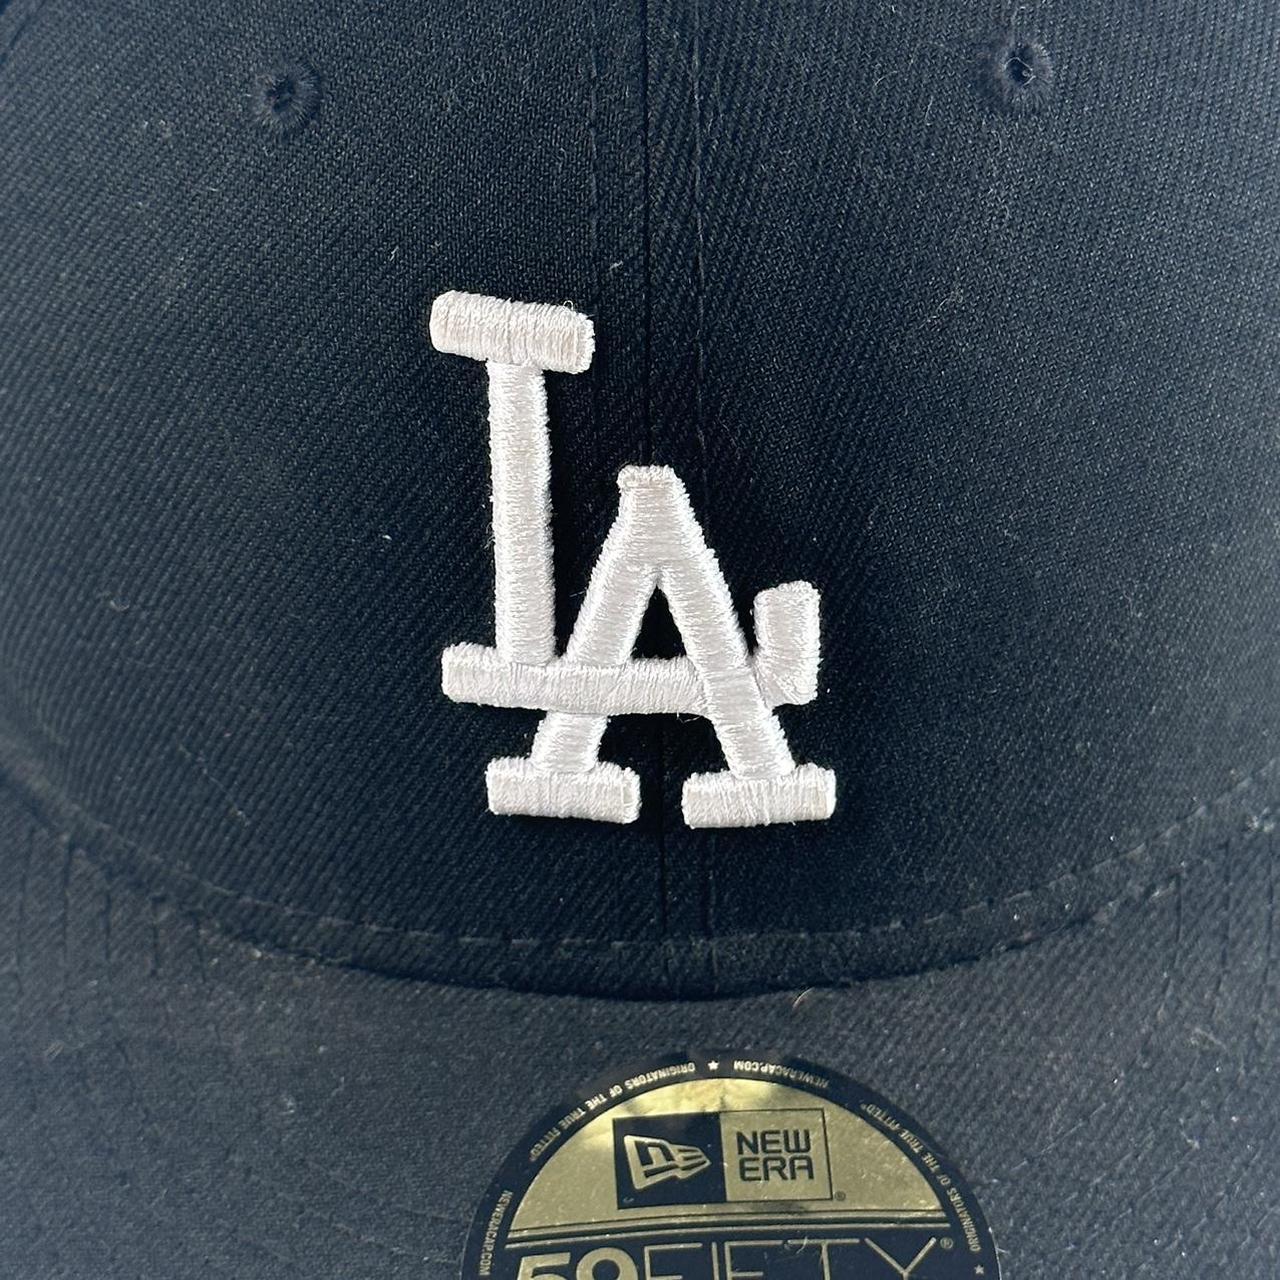 Dodgers Fitted Cap 7 3/8 #baseball #hat #dodgers - Depop